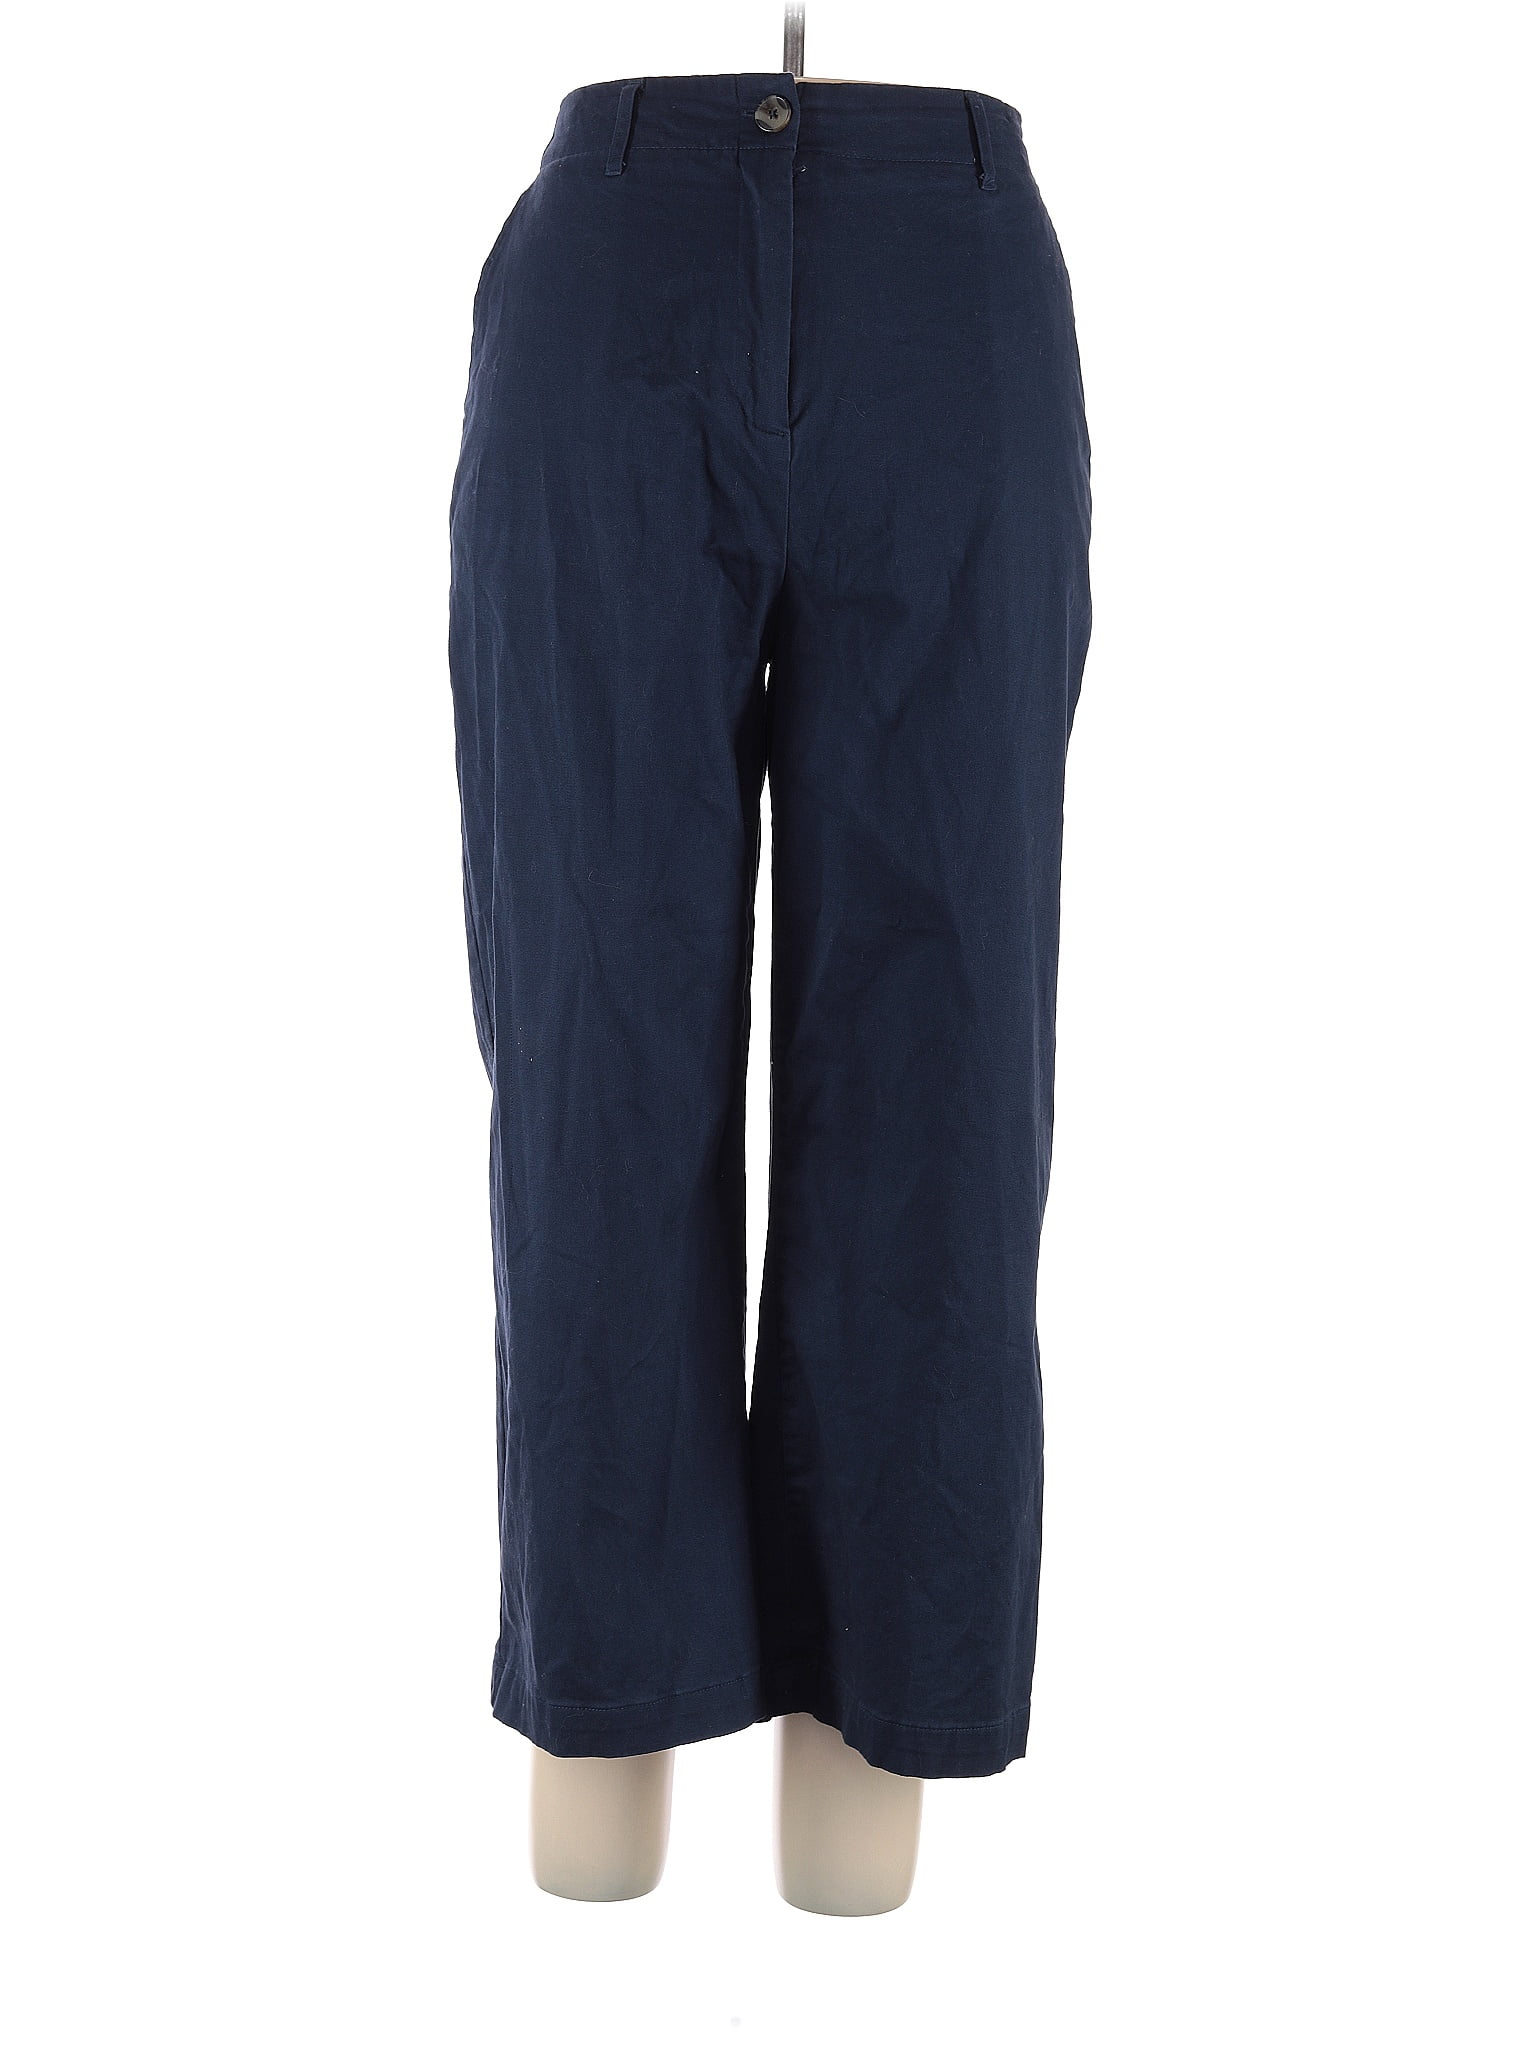 Ophelia Roe Navy Blue Dress Pants Size 16 - 50% off | thredUP